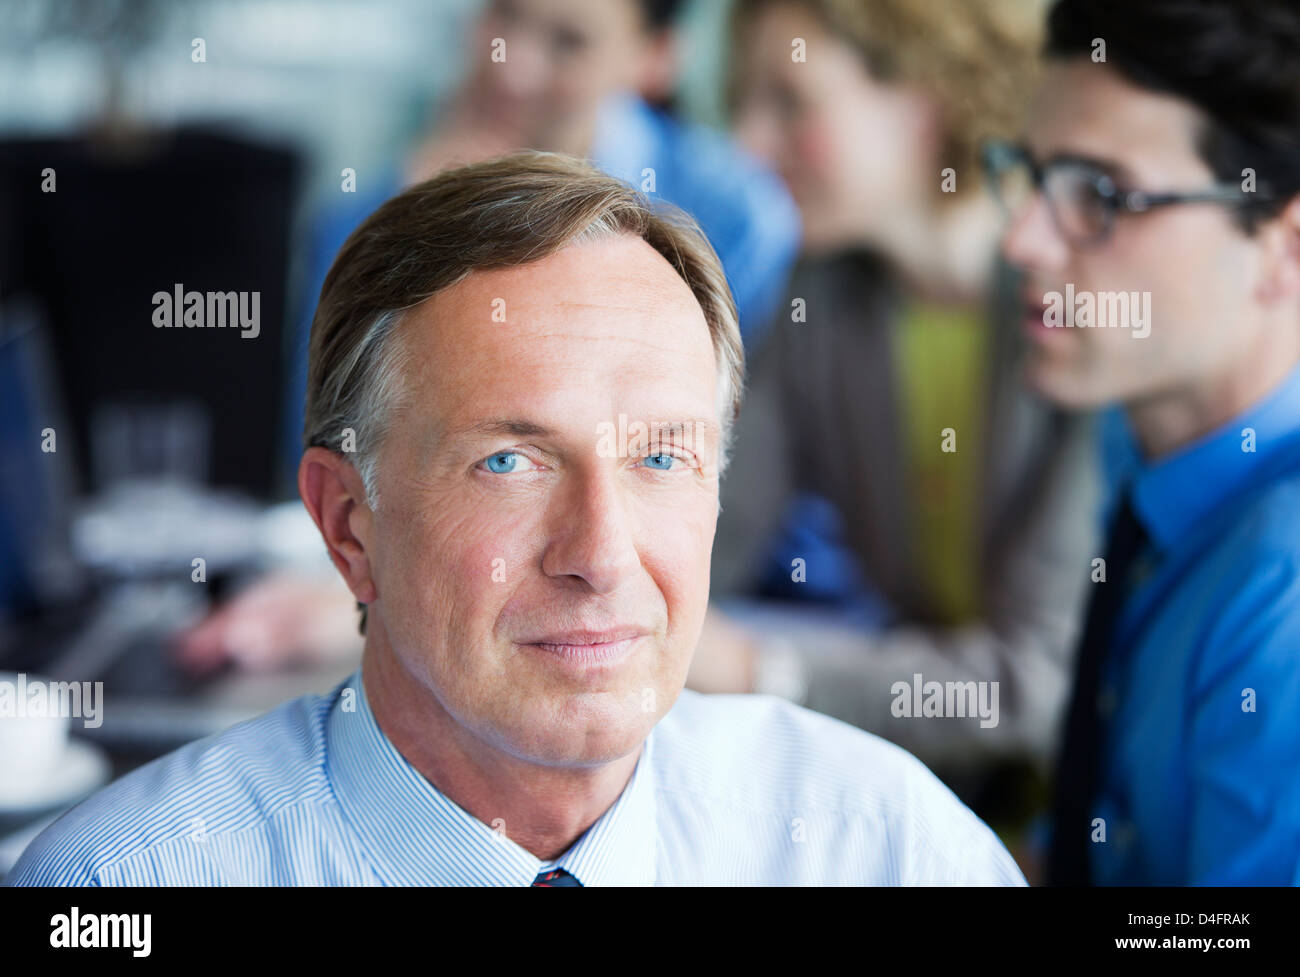 Close up of businessman's serious face Stock Photo